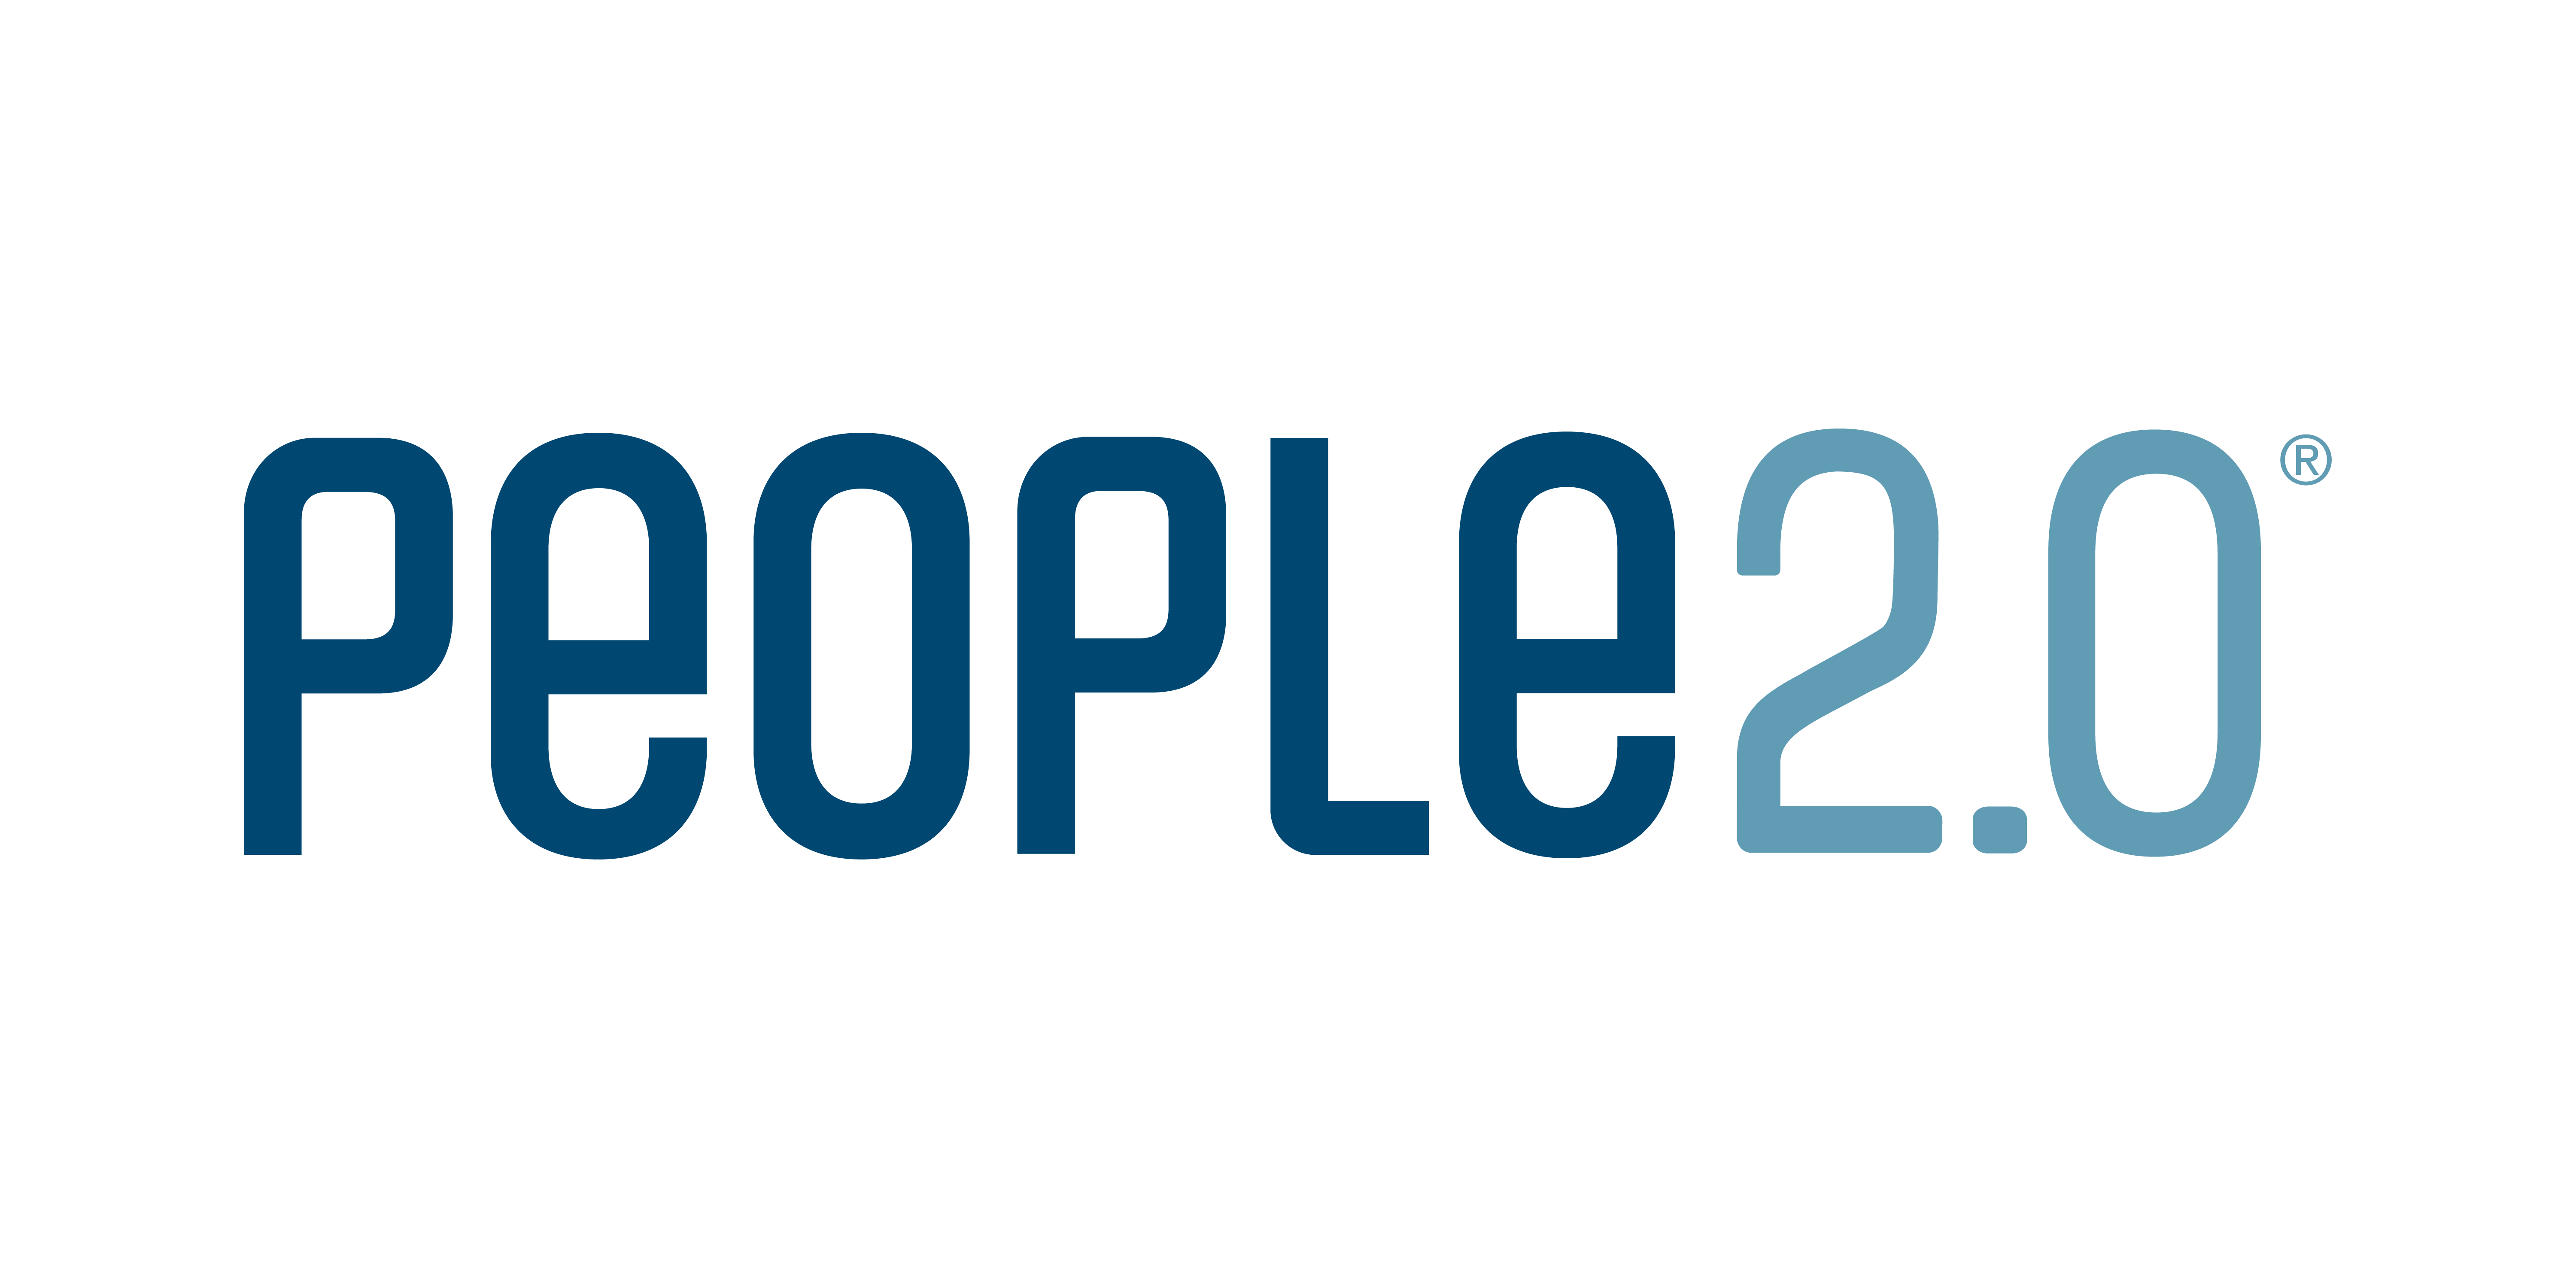 People2.0